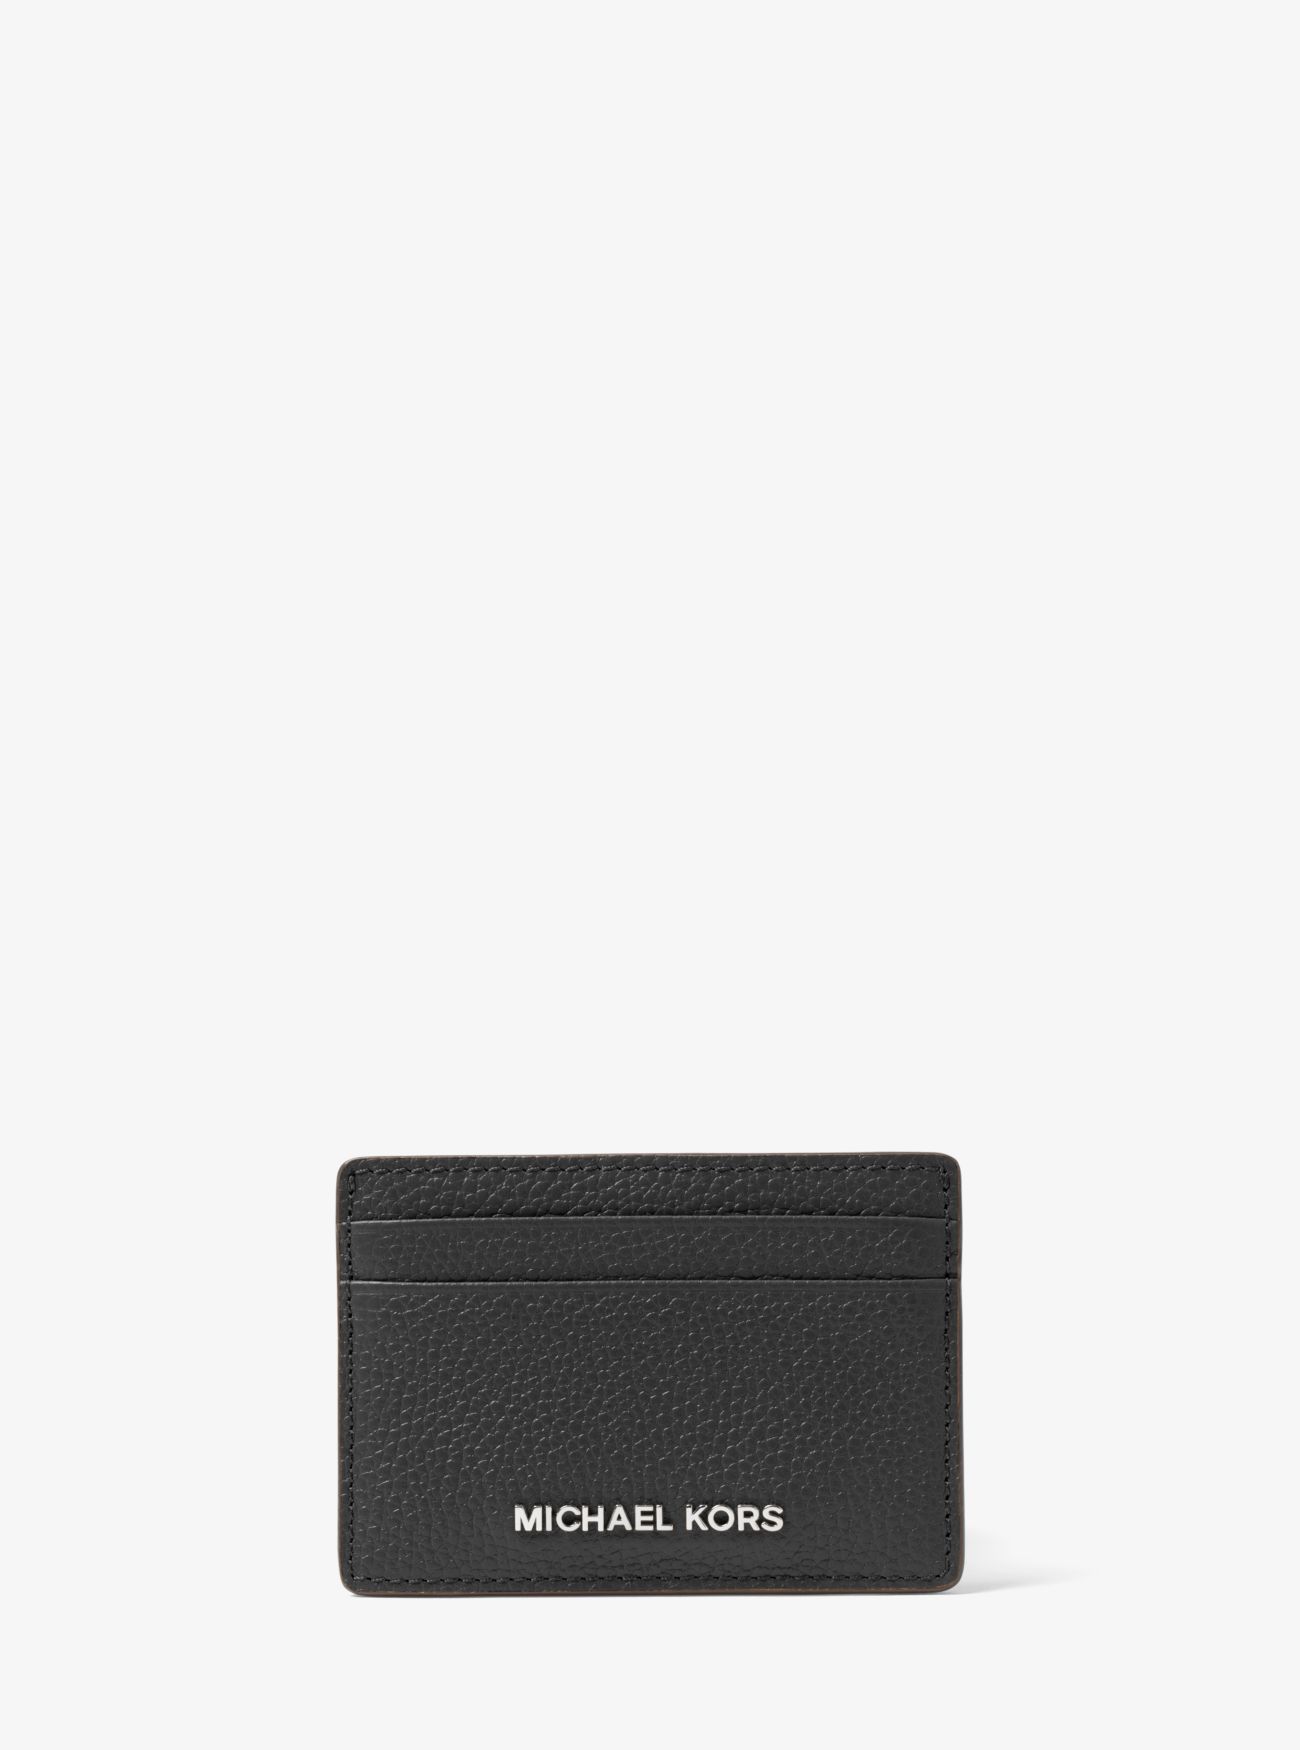 MK Pebbled Leather Card Case - Black - Michael Kors